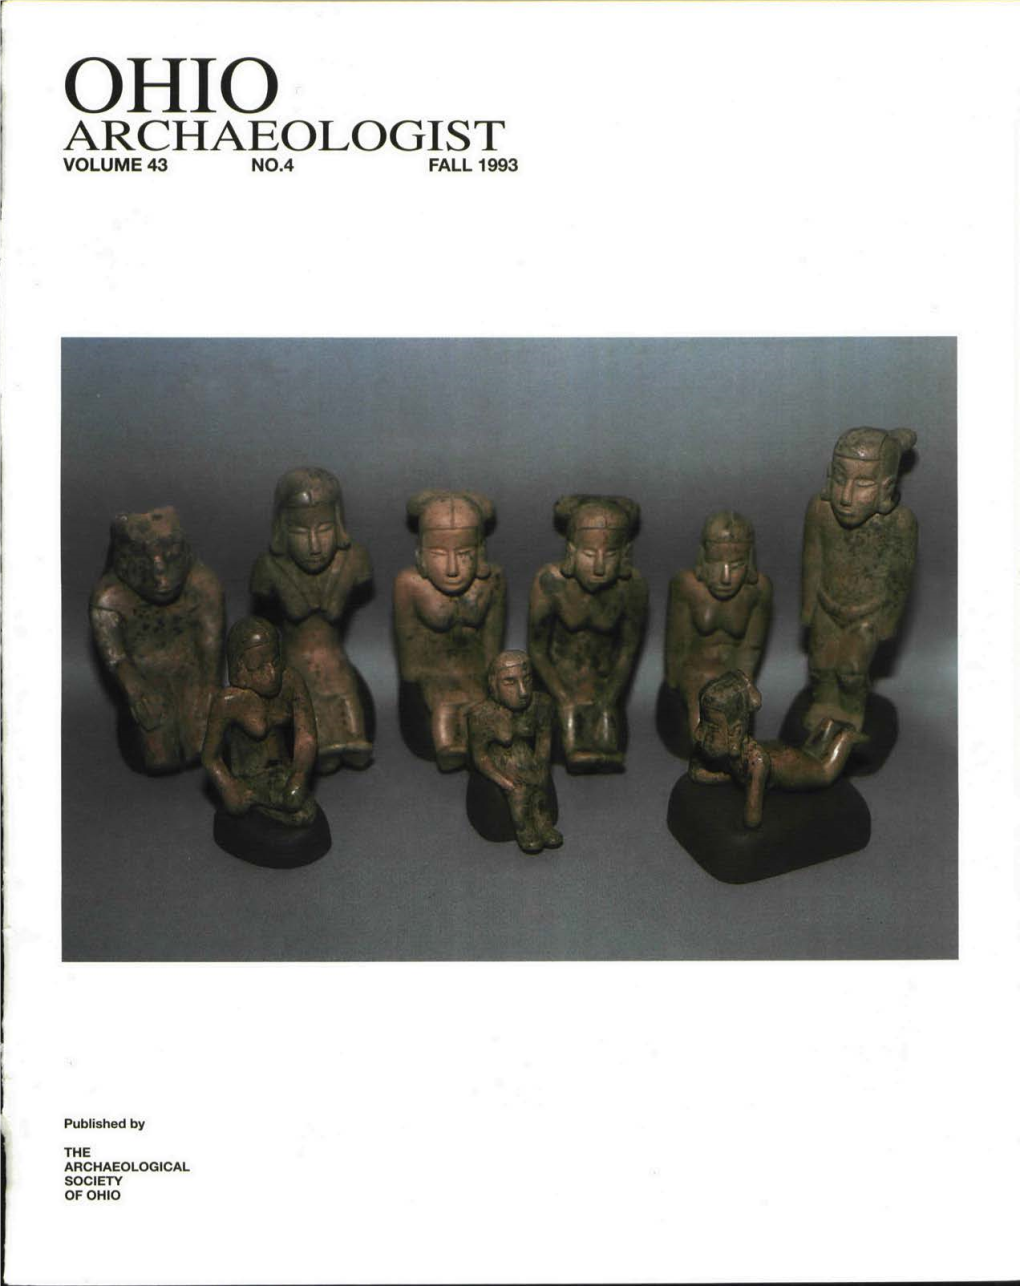 Archaeologist Volume 43 No.4 Fall 1993